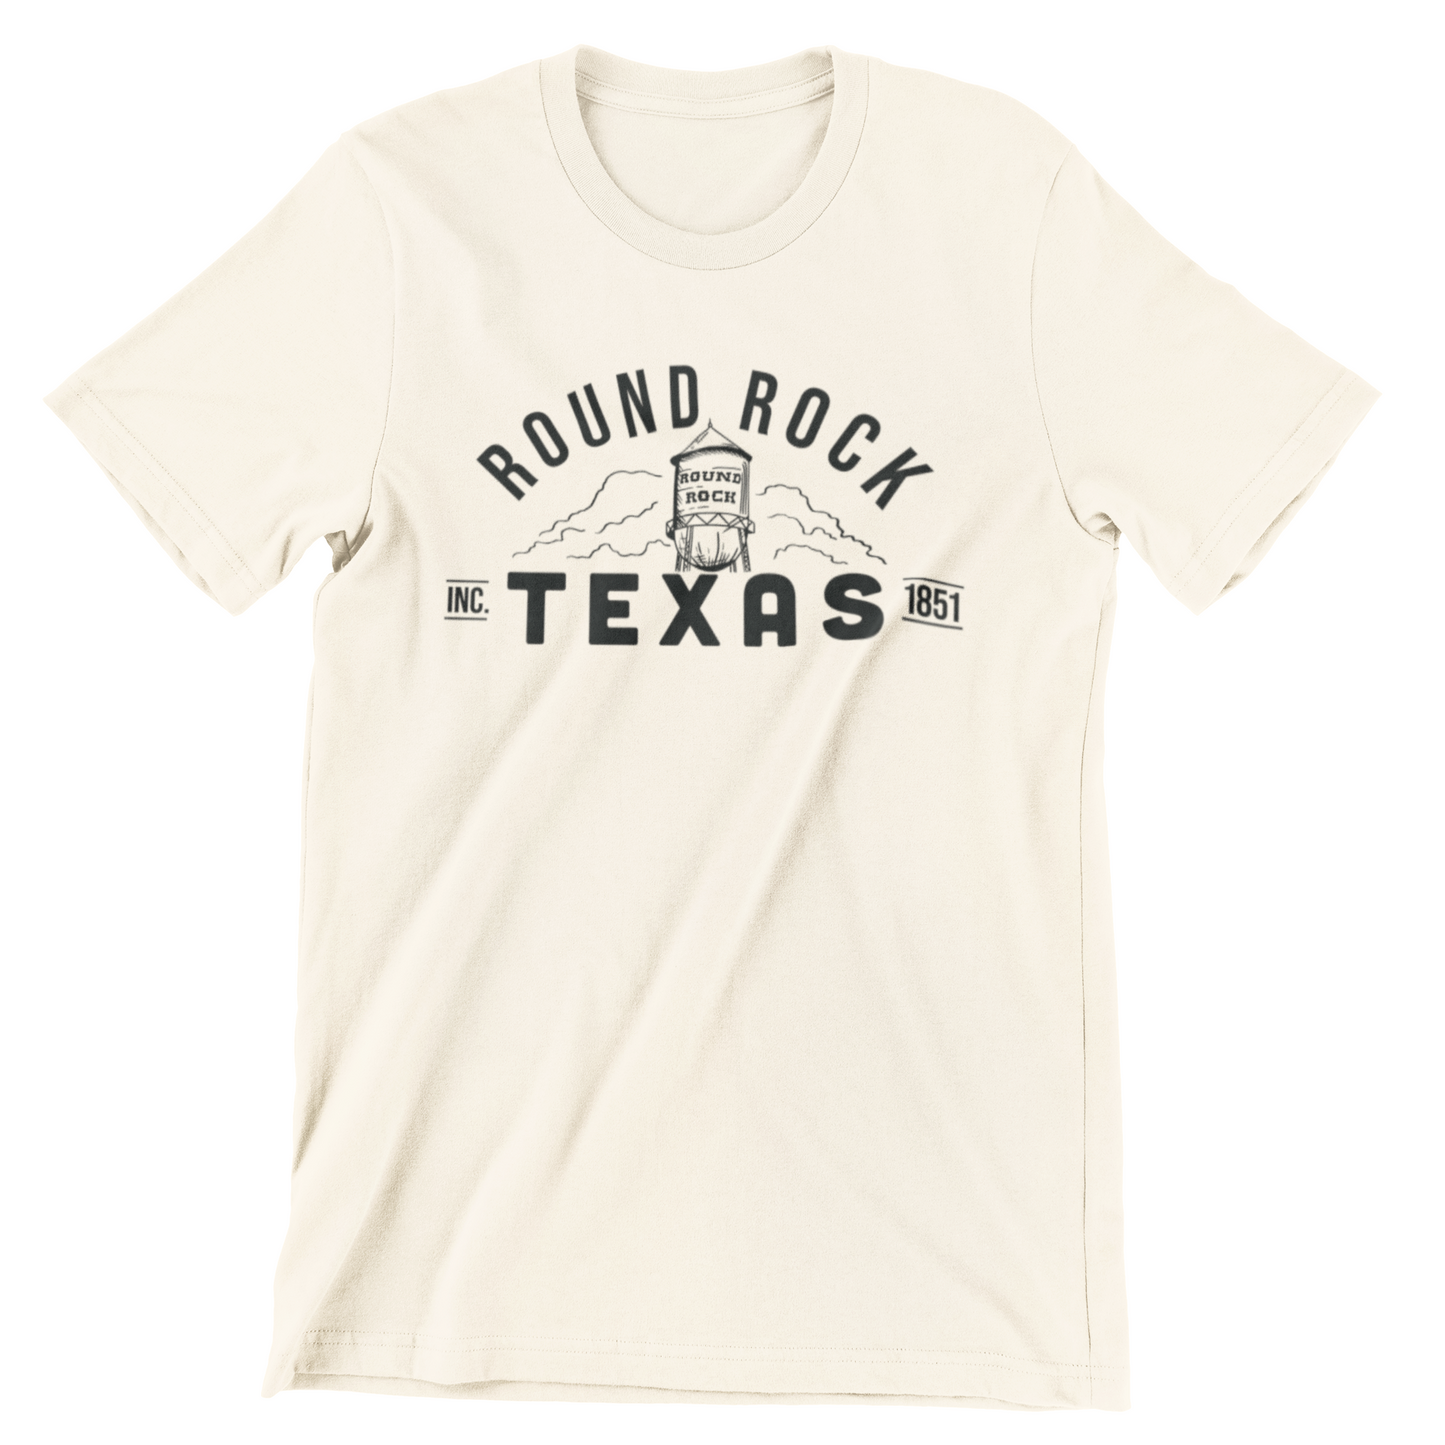 Round Rock Texas T-shirt